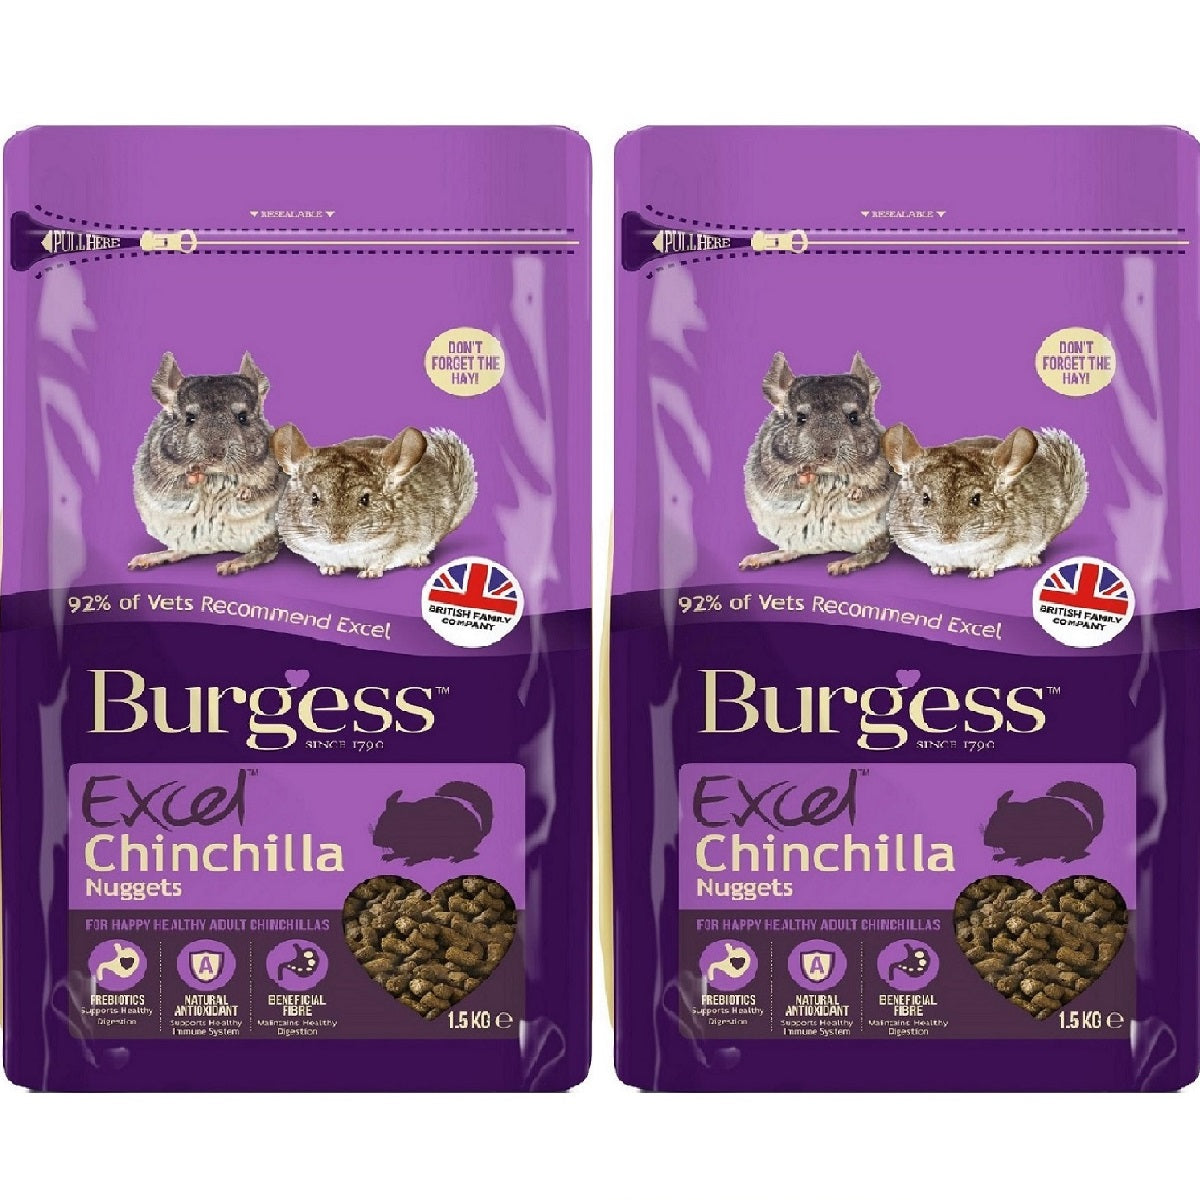 Burgess - Excel Chinchilla Nuggets (1.5kg)